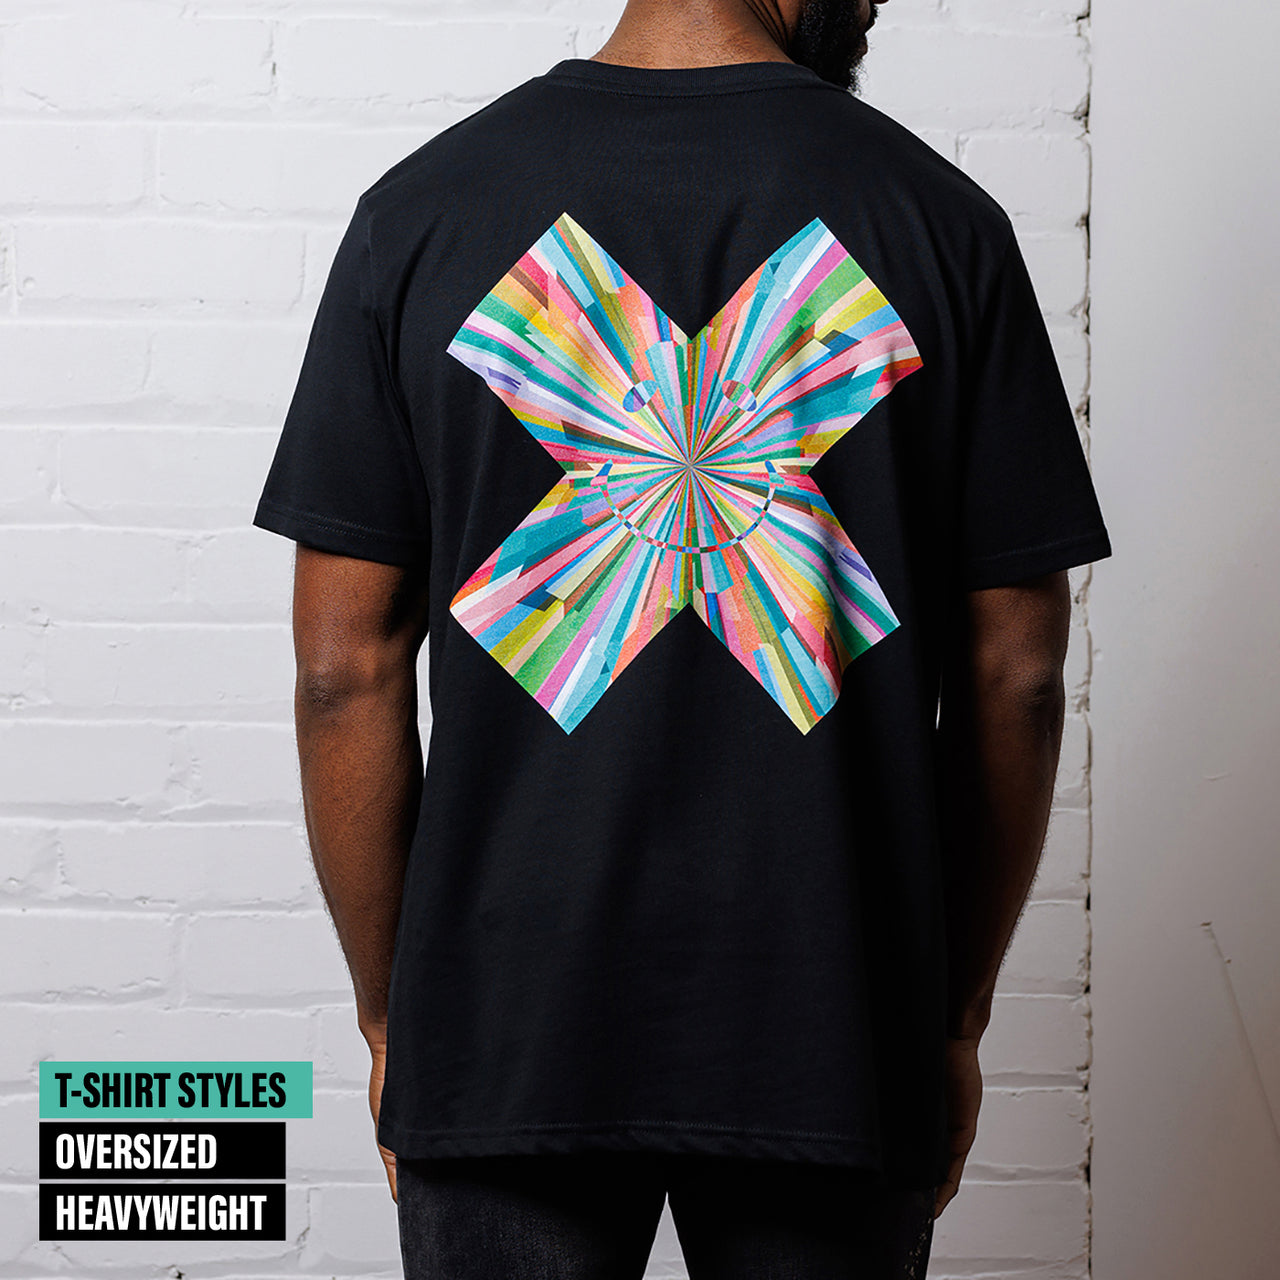 Spectrum Smiley X Imprint - Tshirt - Black